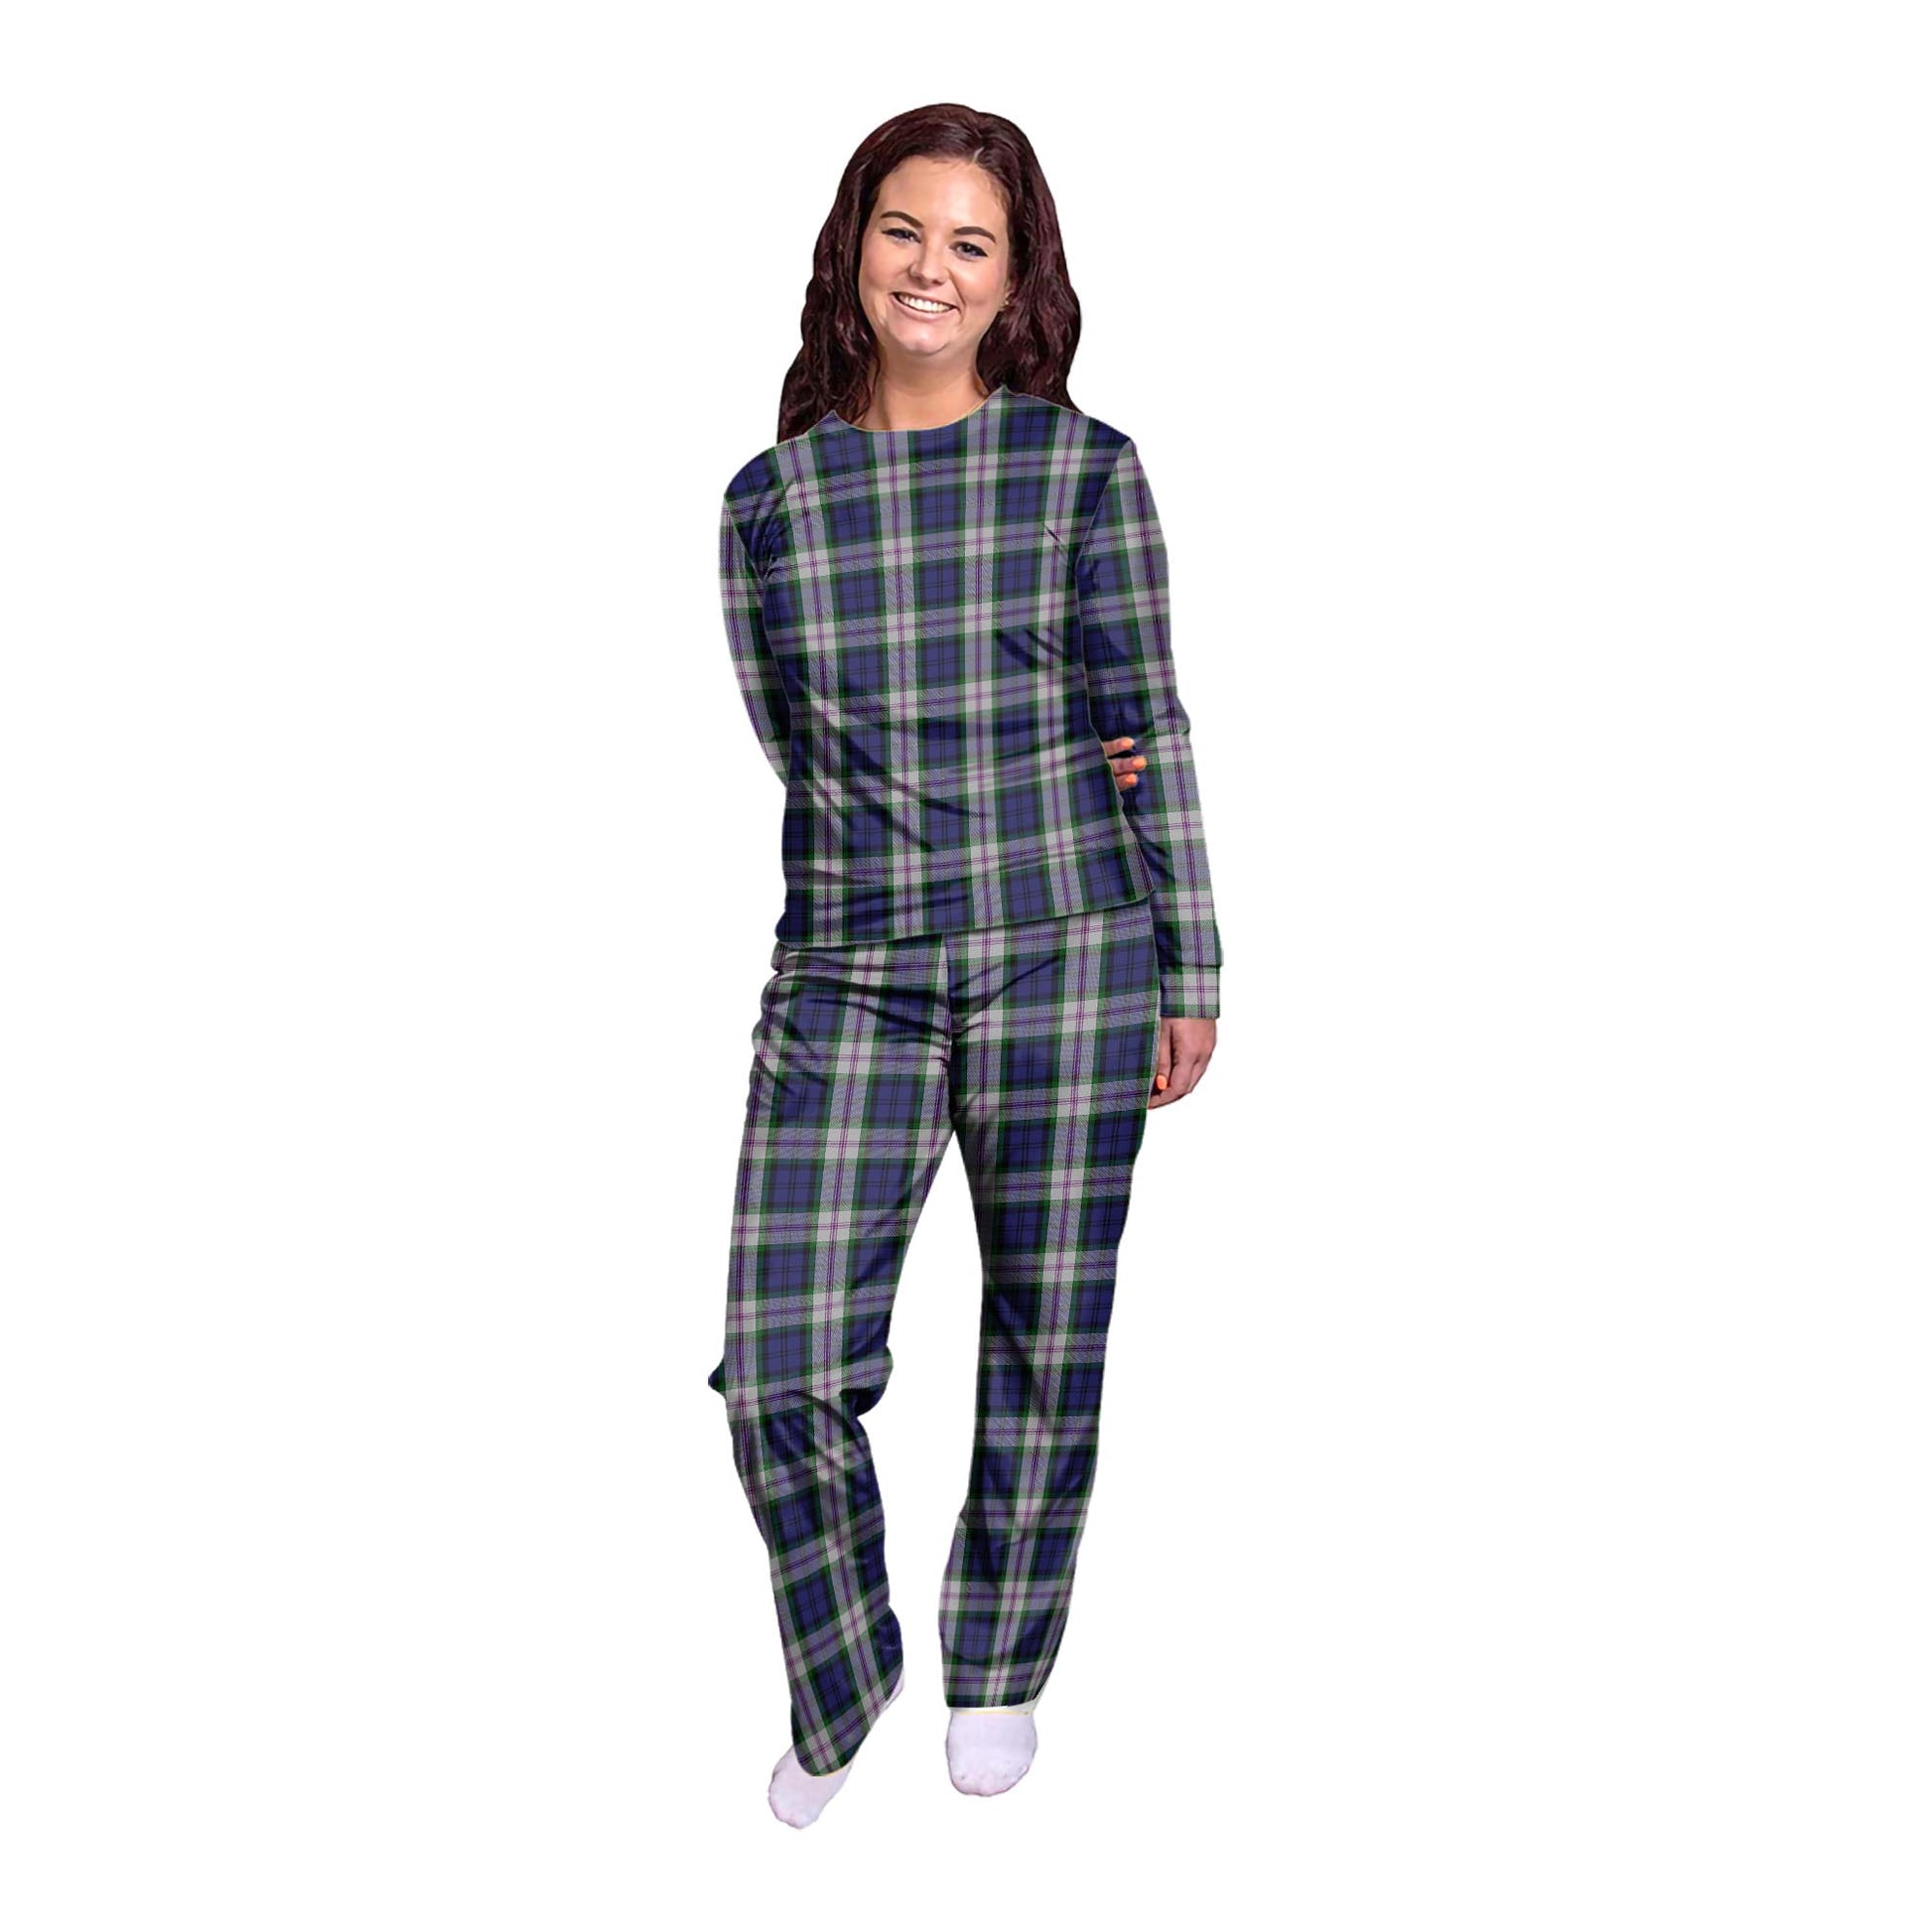 Baird Dress Tartan Pajamas Family Set - Tartanvibesclothing